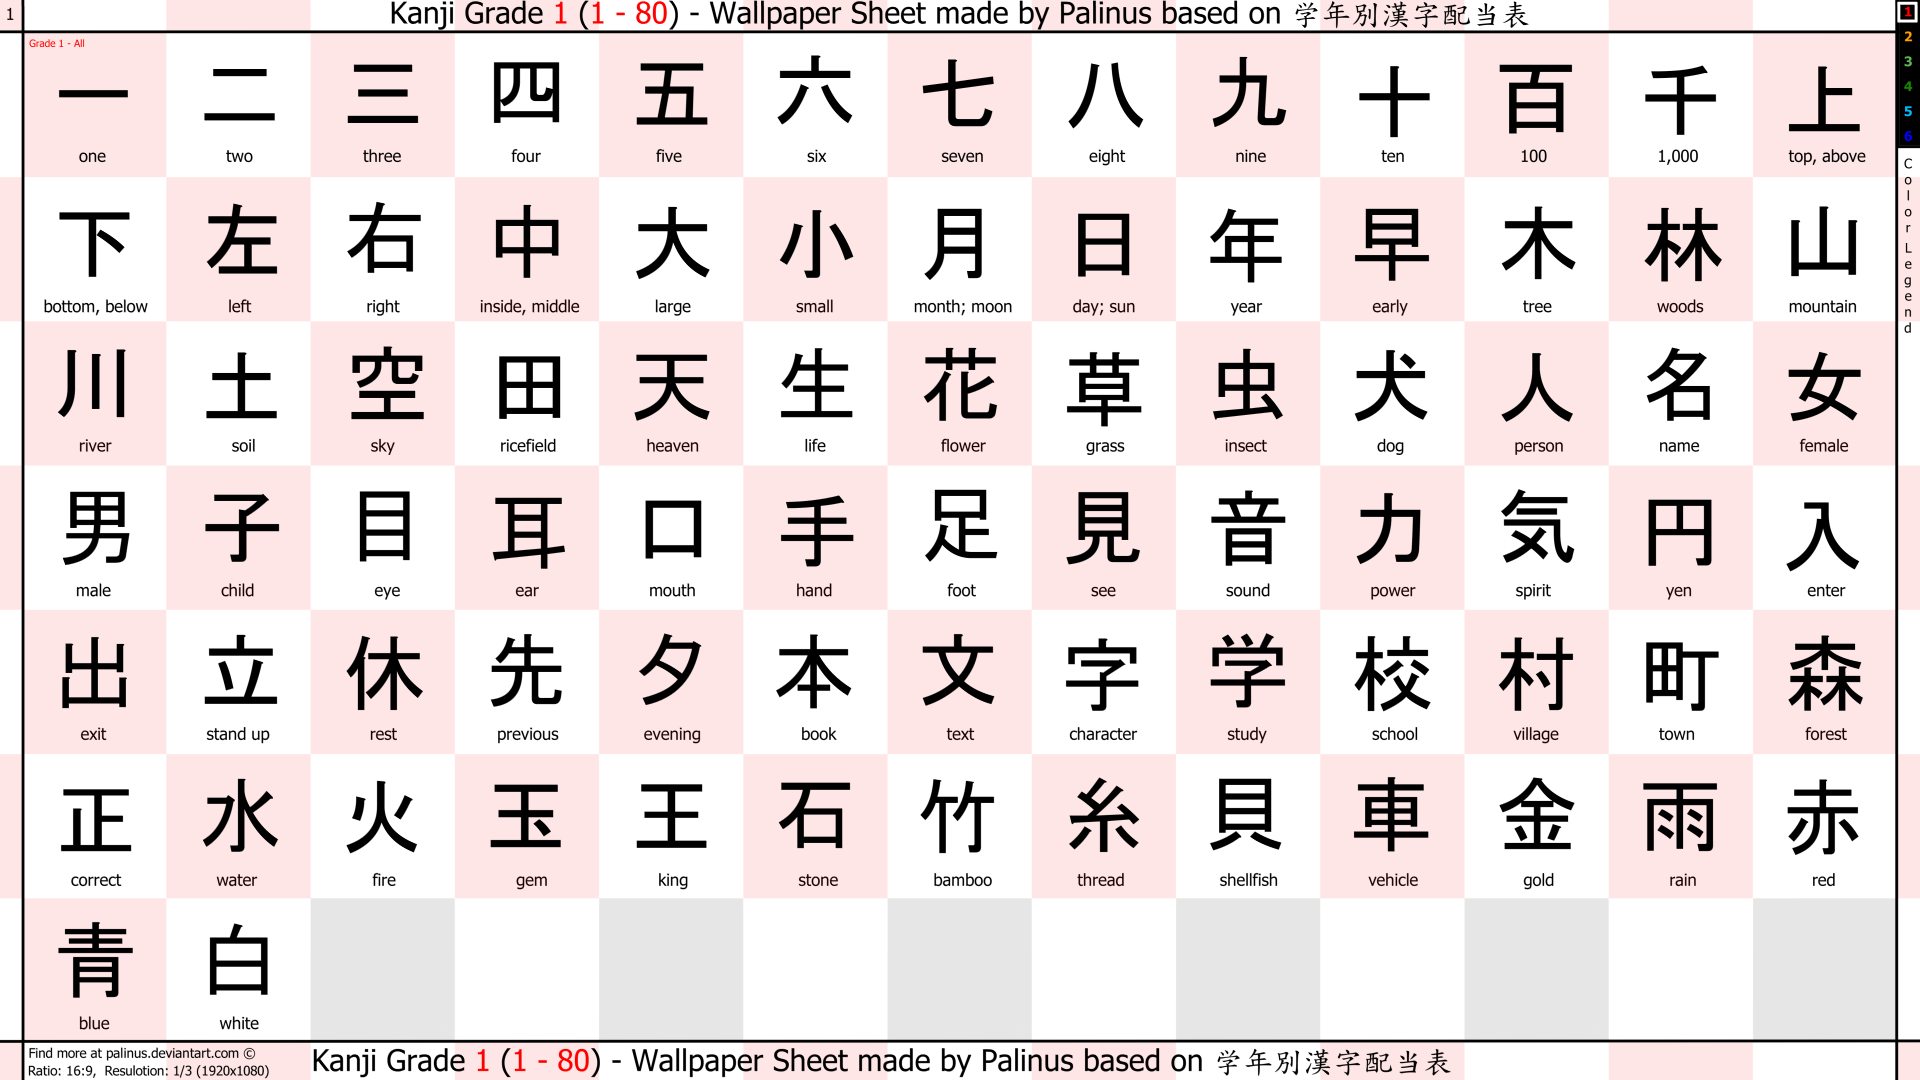 wallpaper-kanji-training-grade-1-1080p-by-palinus-on-deviantart